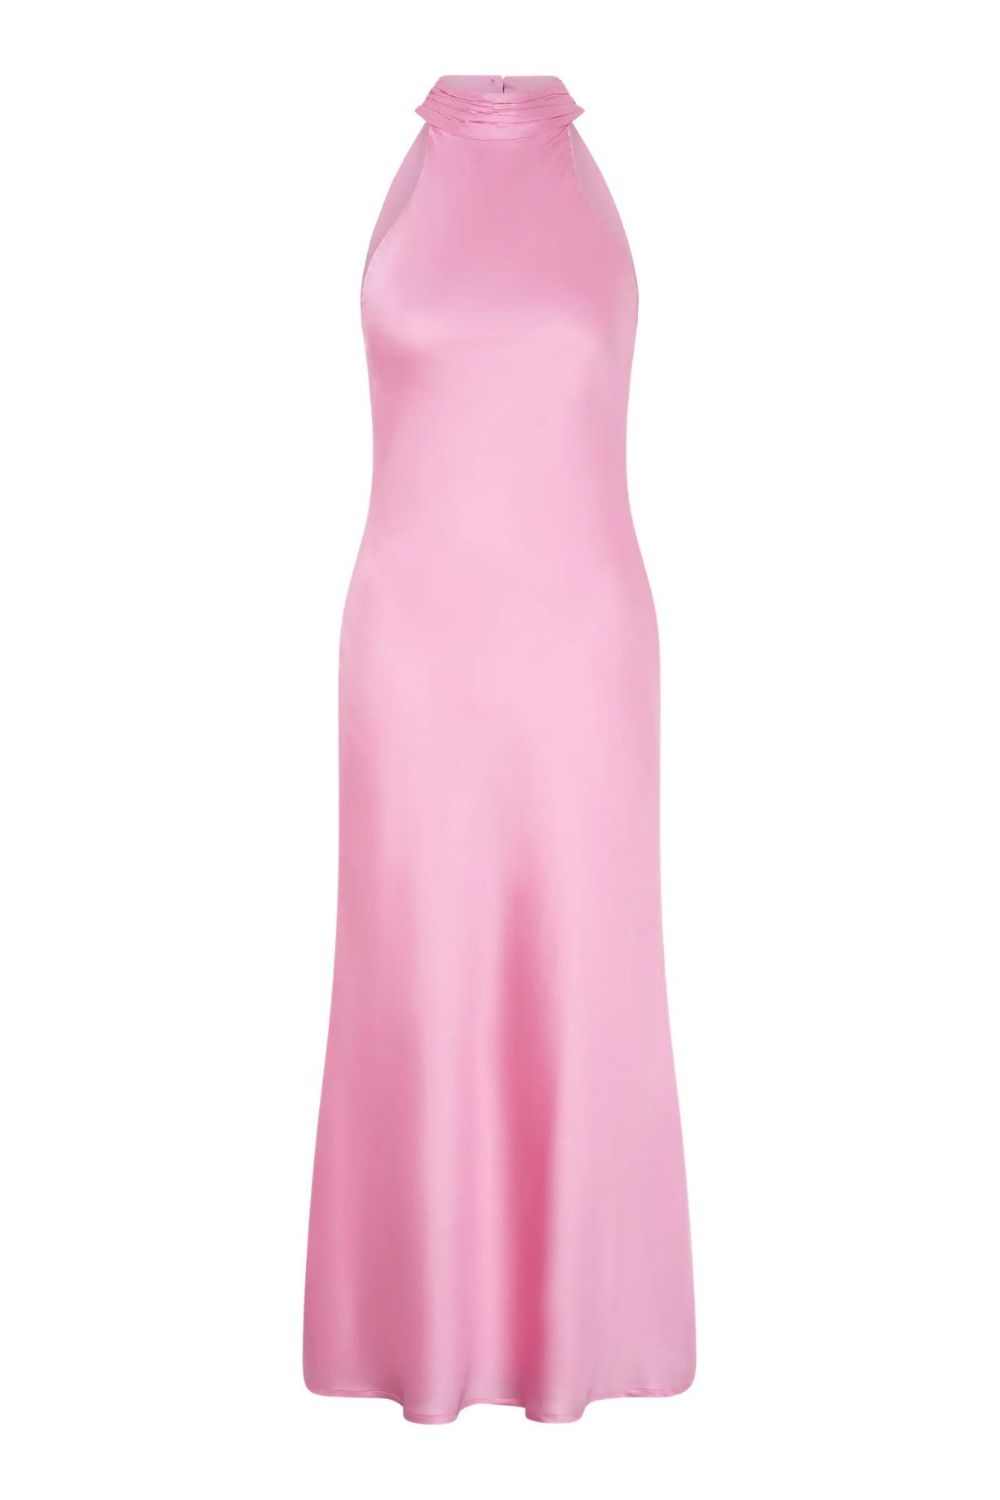 Omnes Seychelles Drape Back Detail Dress in Pink